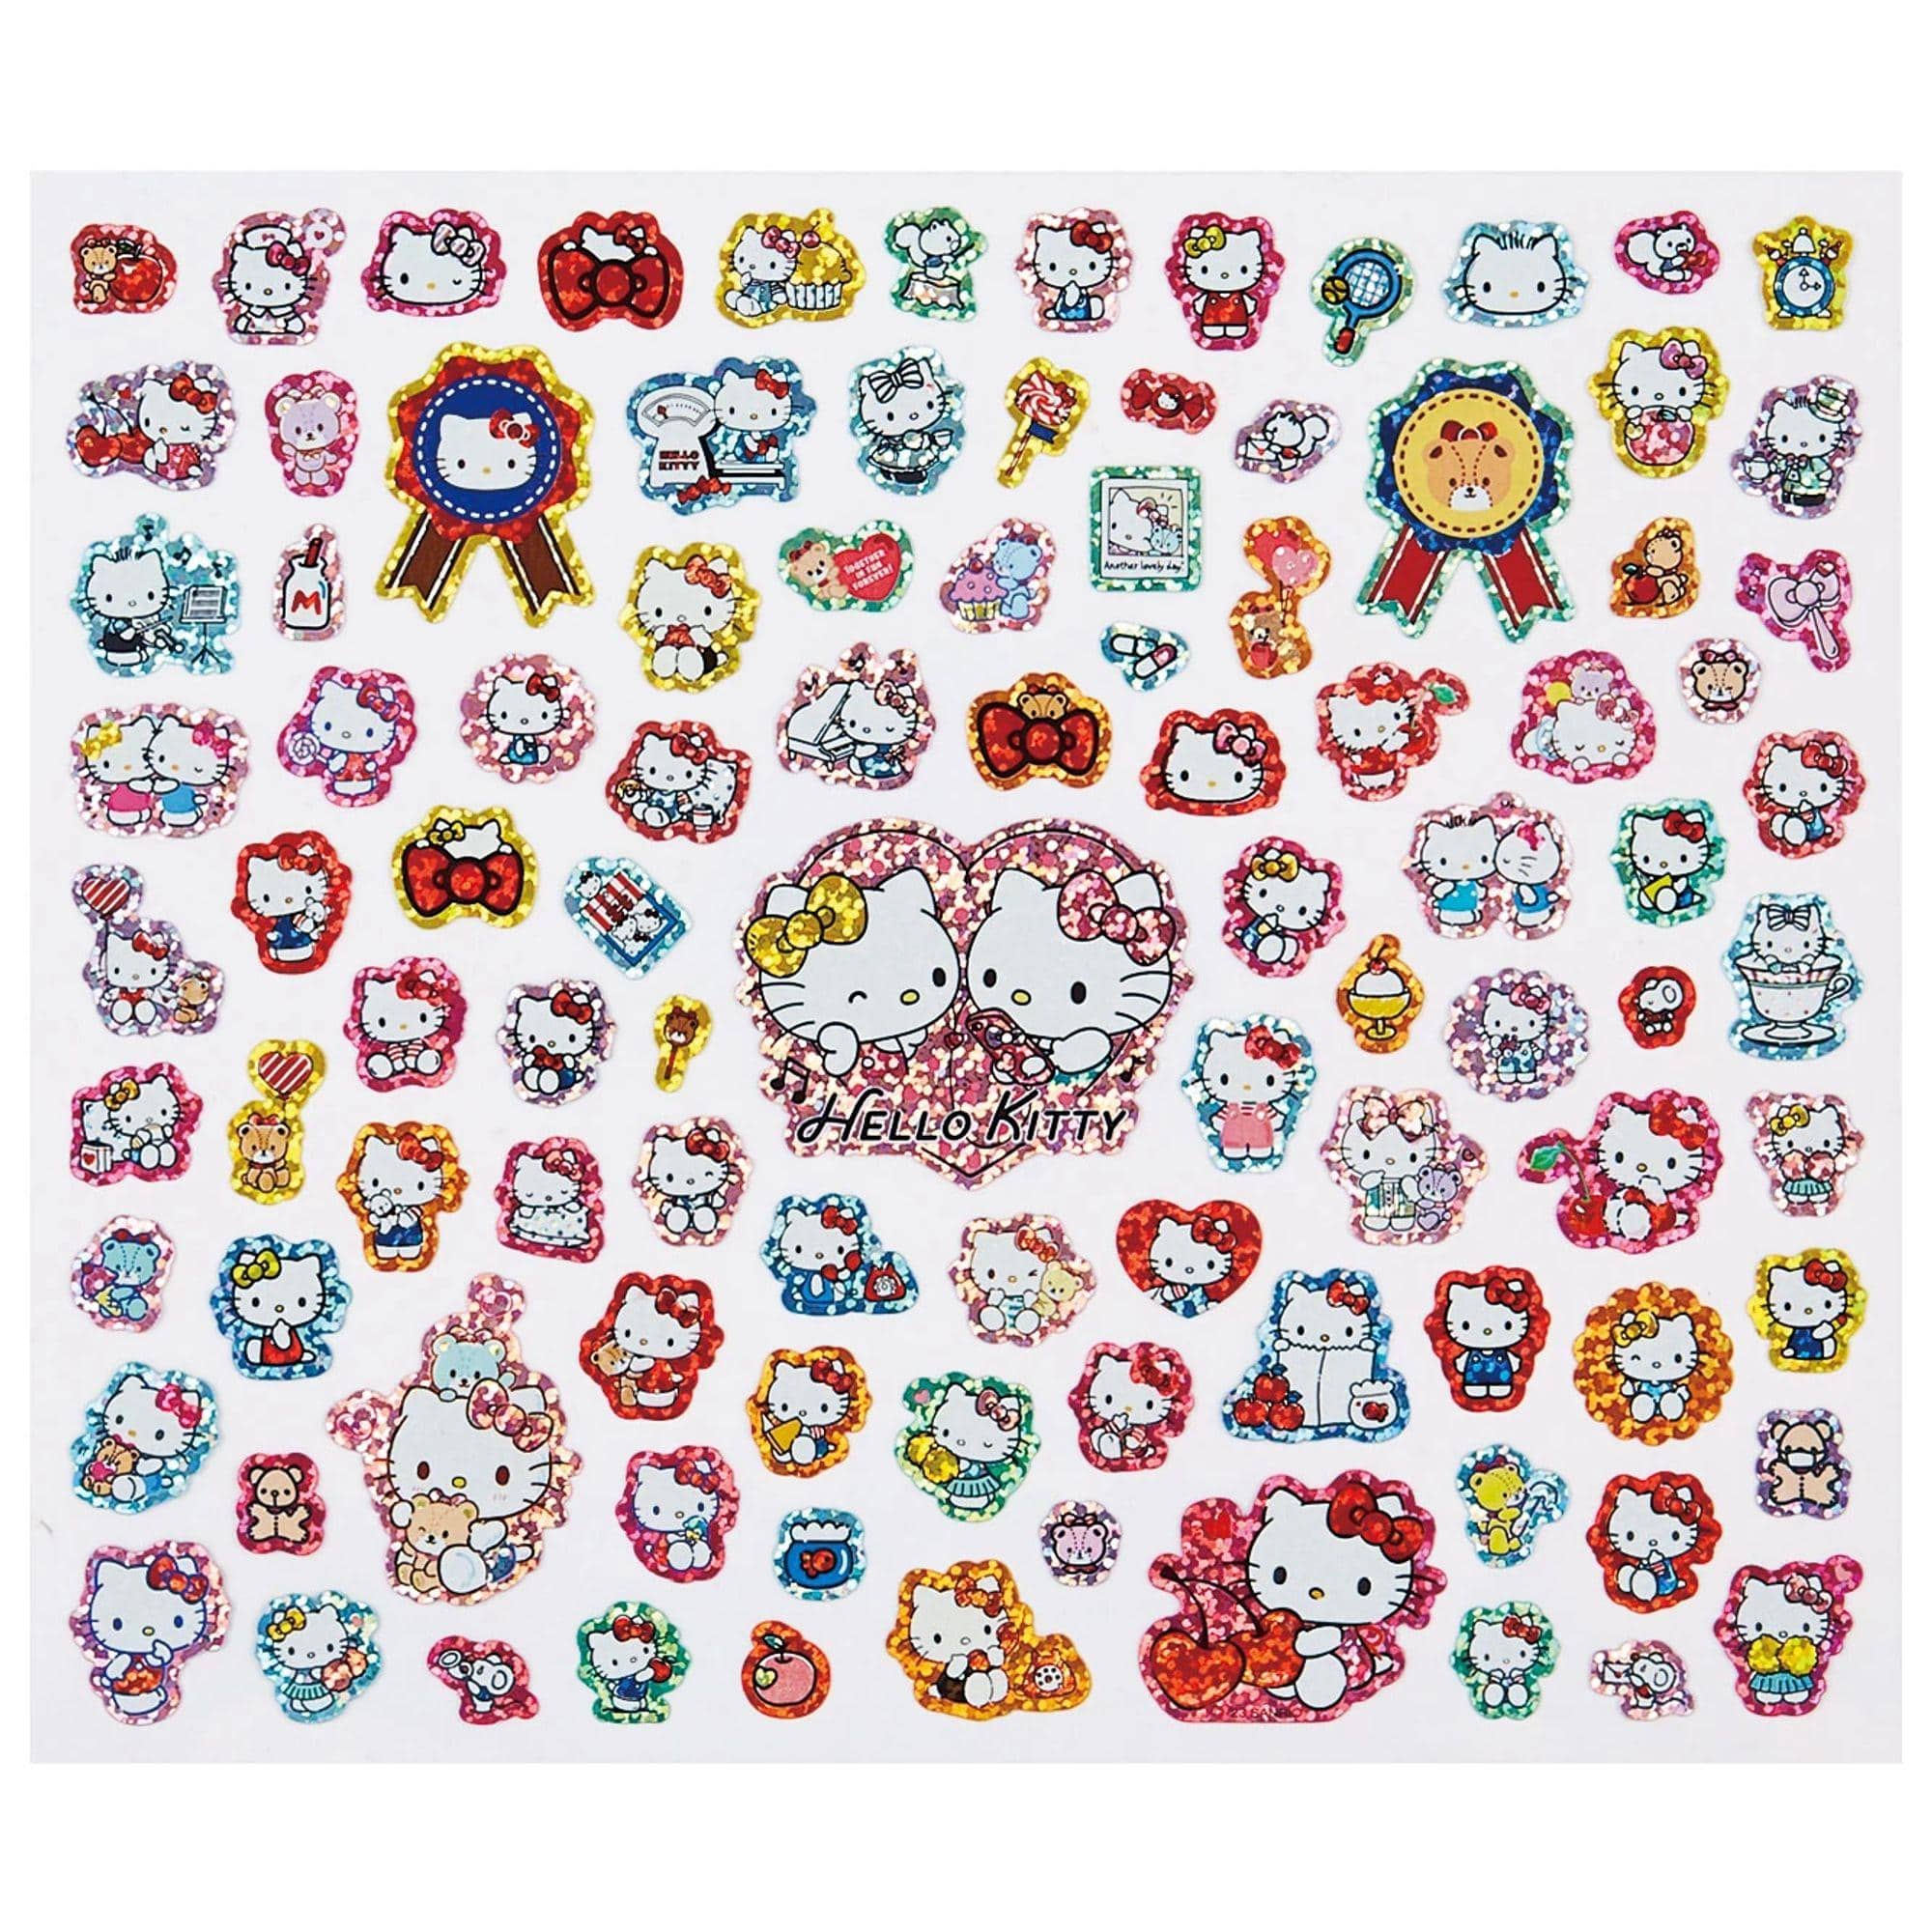 Enesco Sanrio Original Sparkly Stickers Extra Large Sheets Hello Kitty Kawaii Gifts